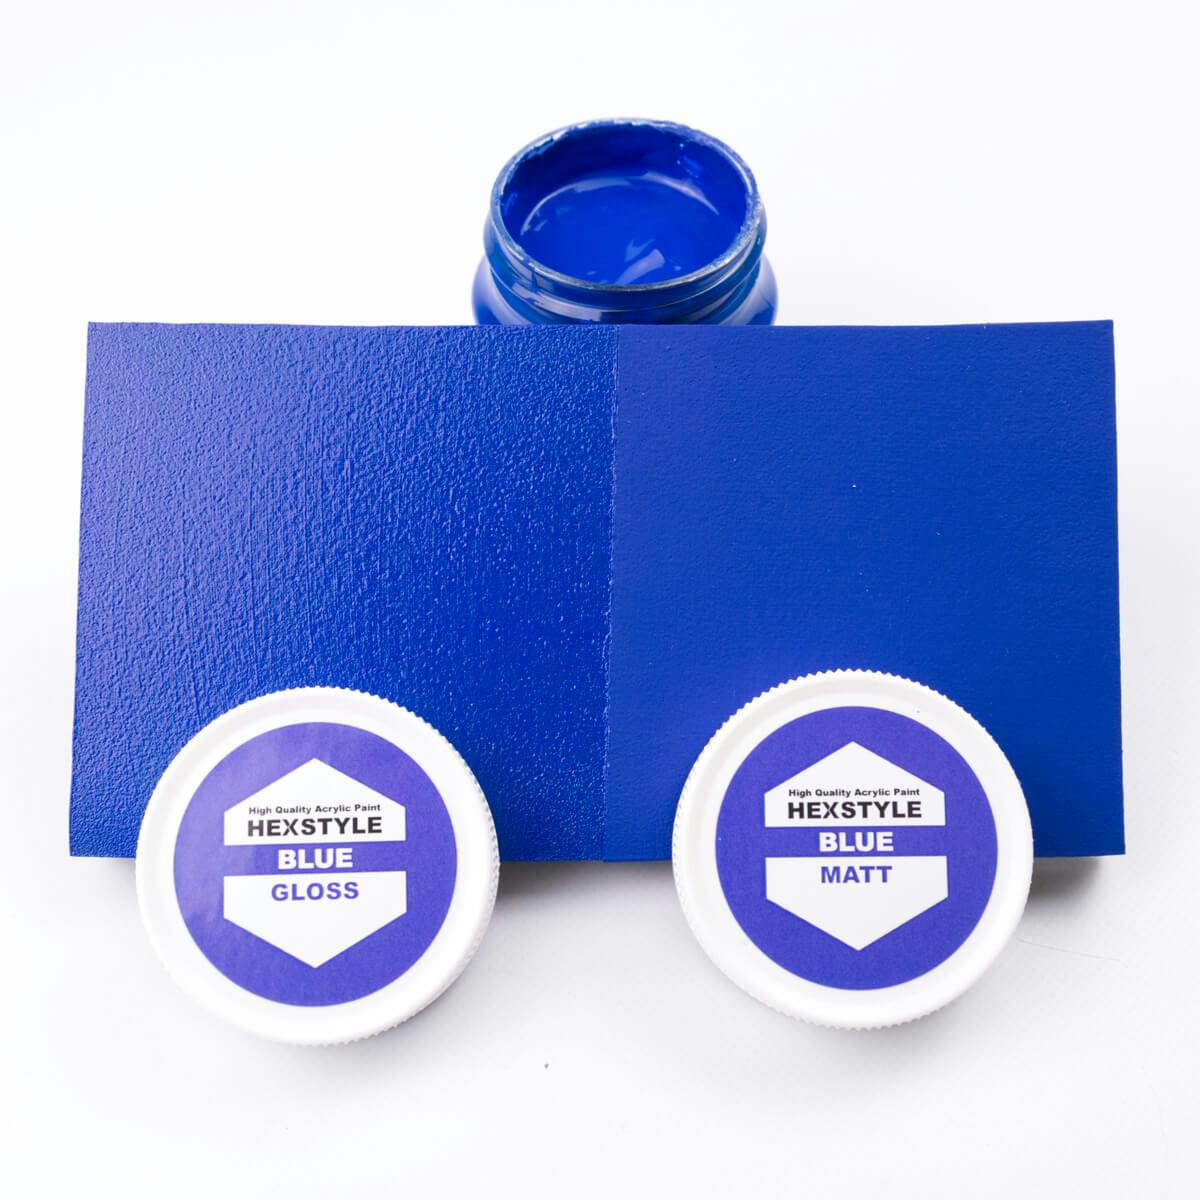 Hexstyle gloss and matt blue colour swatch